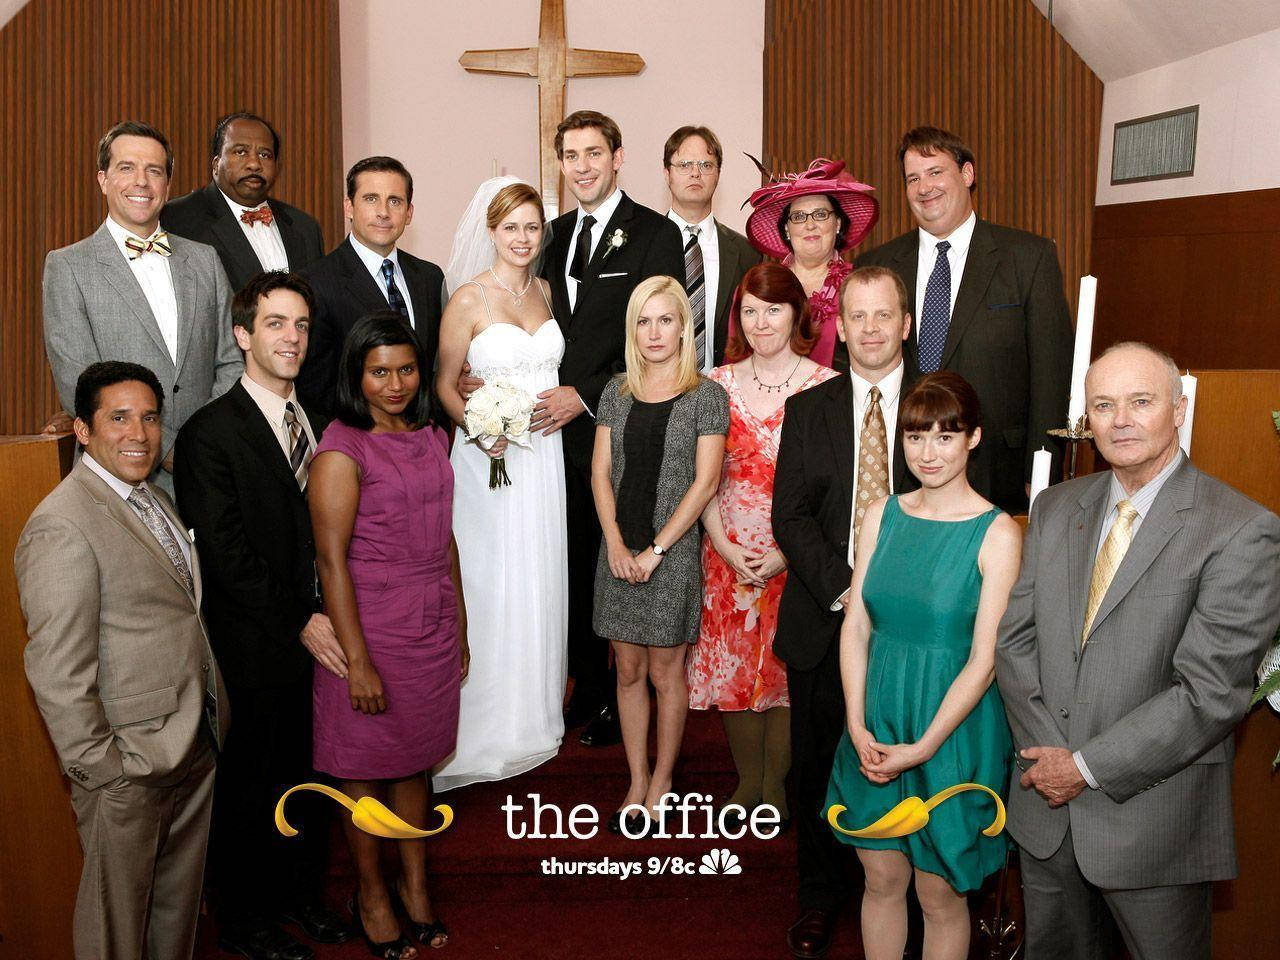 The Office Church Wedding Poster Wallpaper